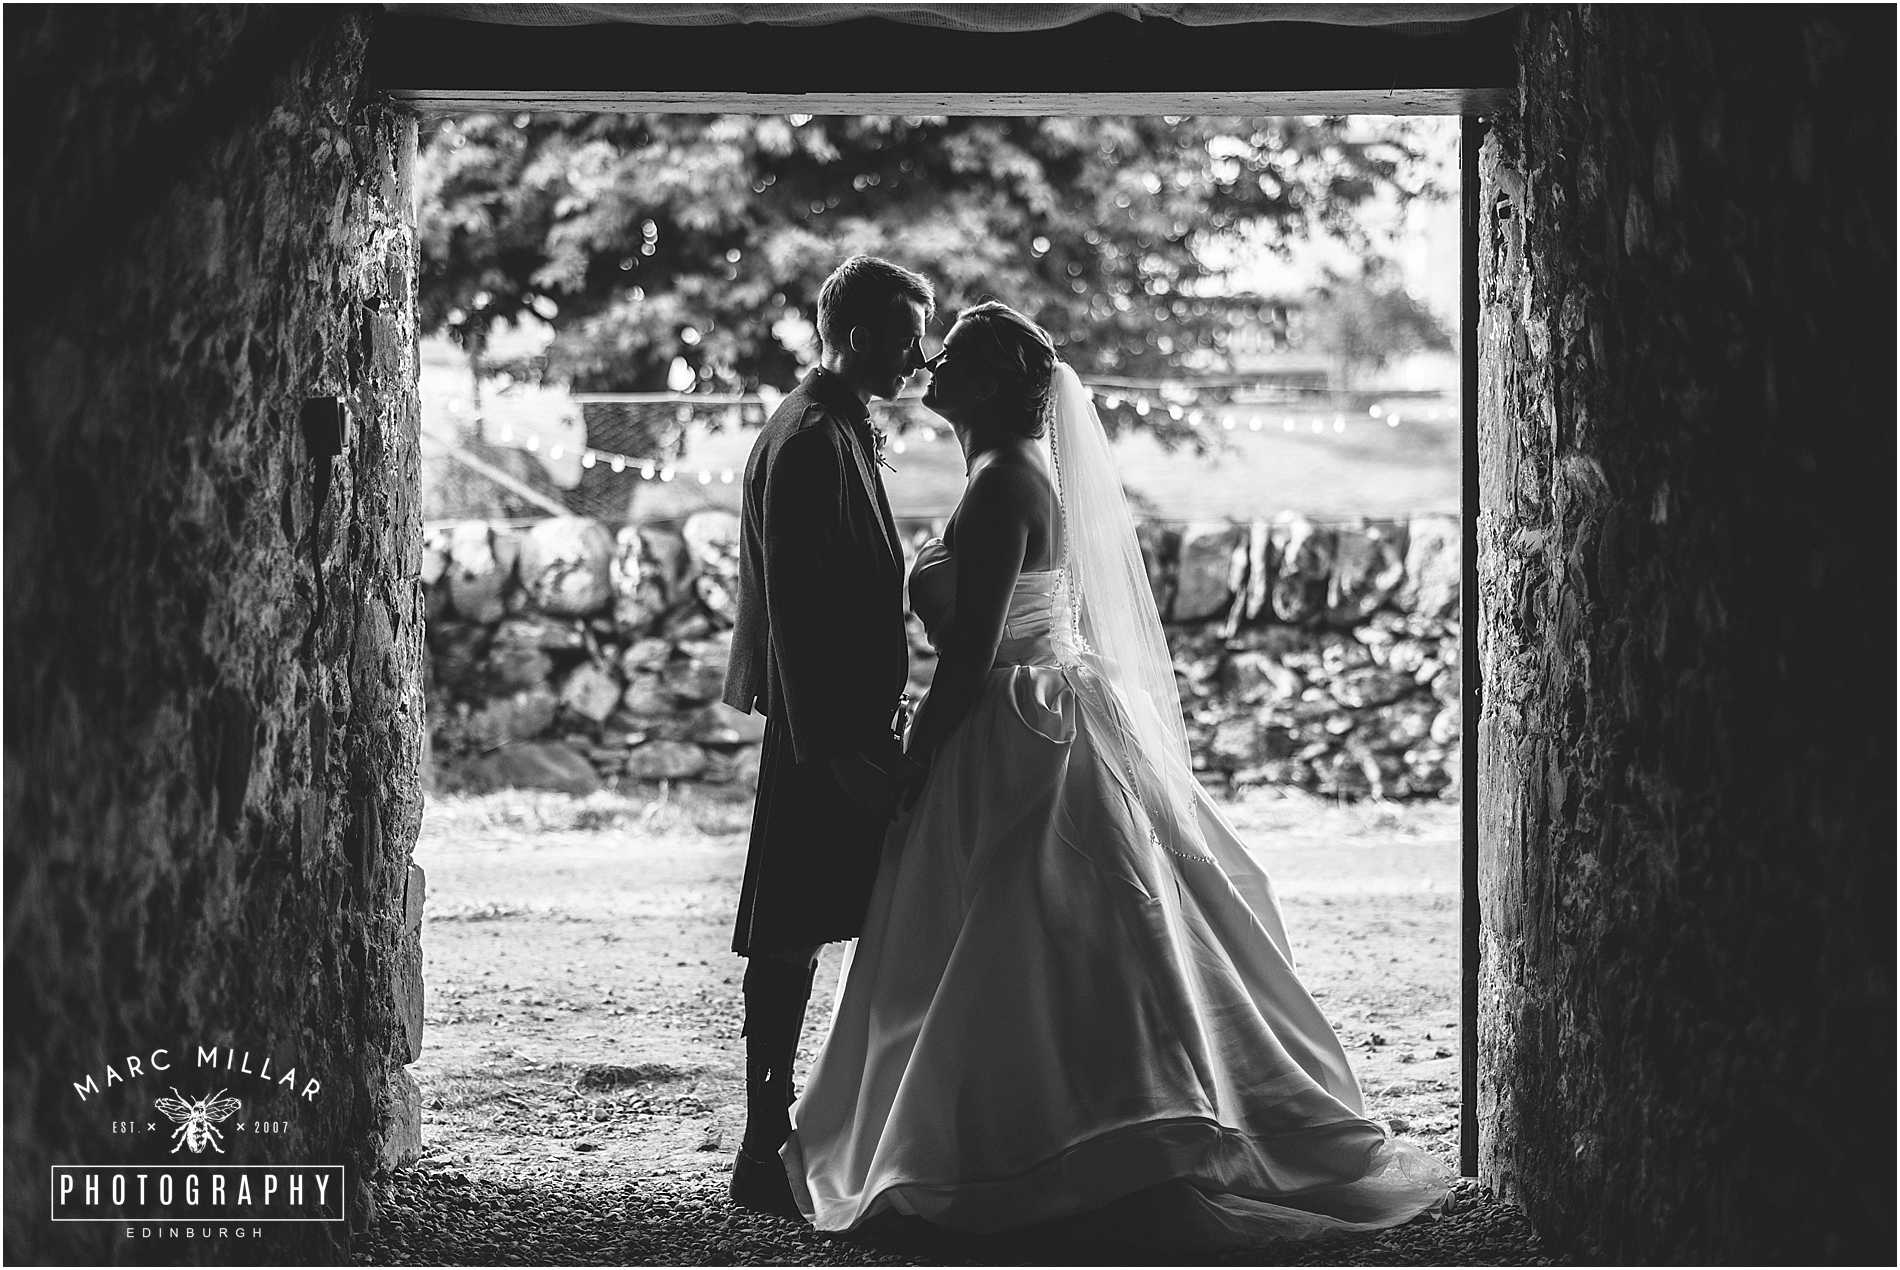  Home Farm Wedding Photography by Marc Millar Wedding Photography 